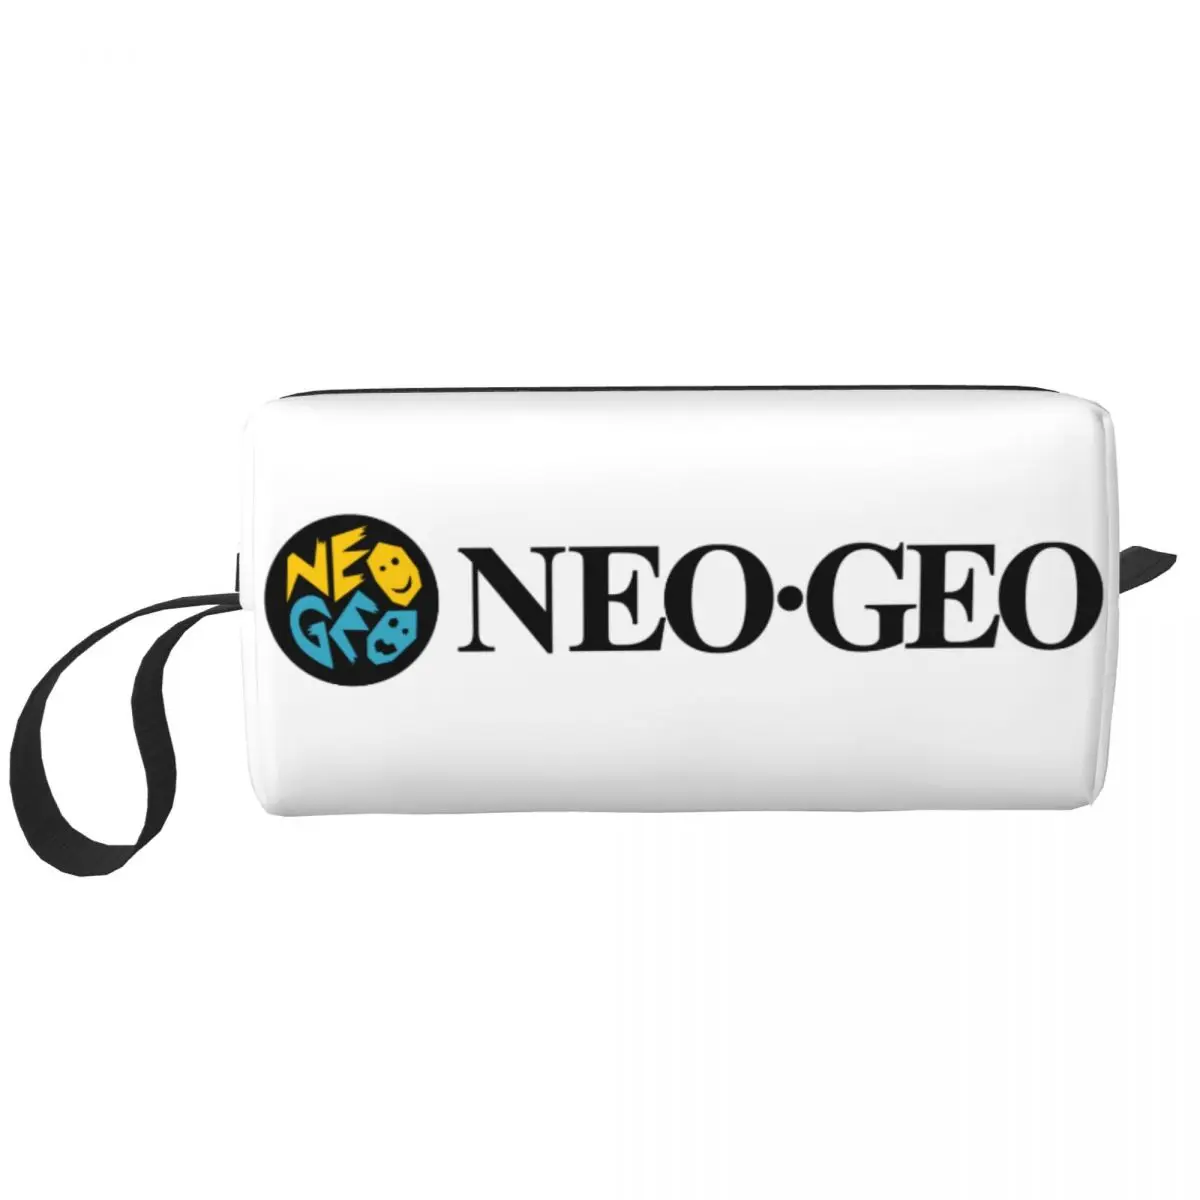 Neo Geo Logo Косметичка Сумка Женщины Путешествия Косметика Органайзер Симпатичный Neogeo Arcade Хранение Туалетные принадлежности Сумки Dopp Kit Чехол Коробка